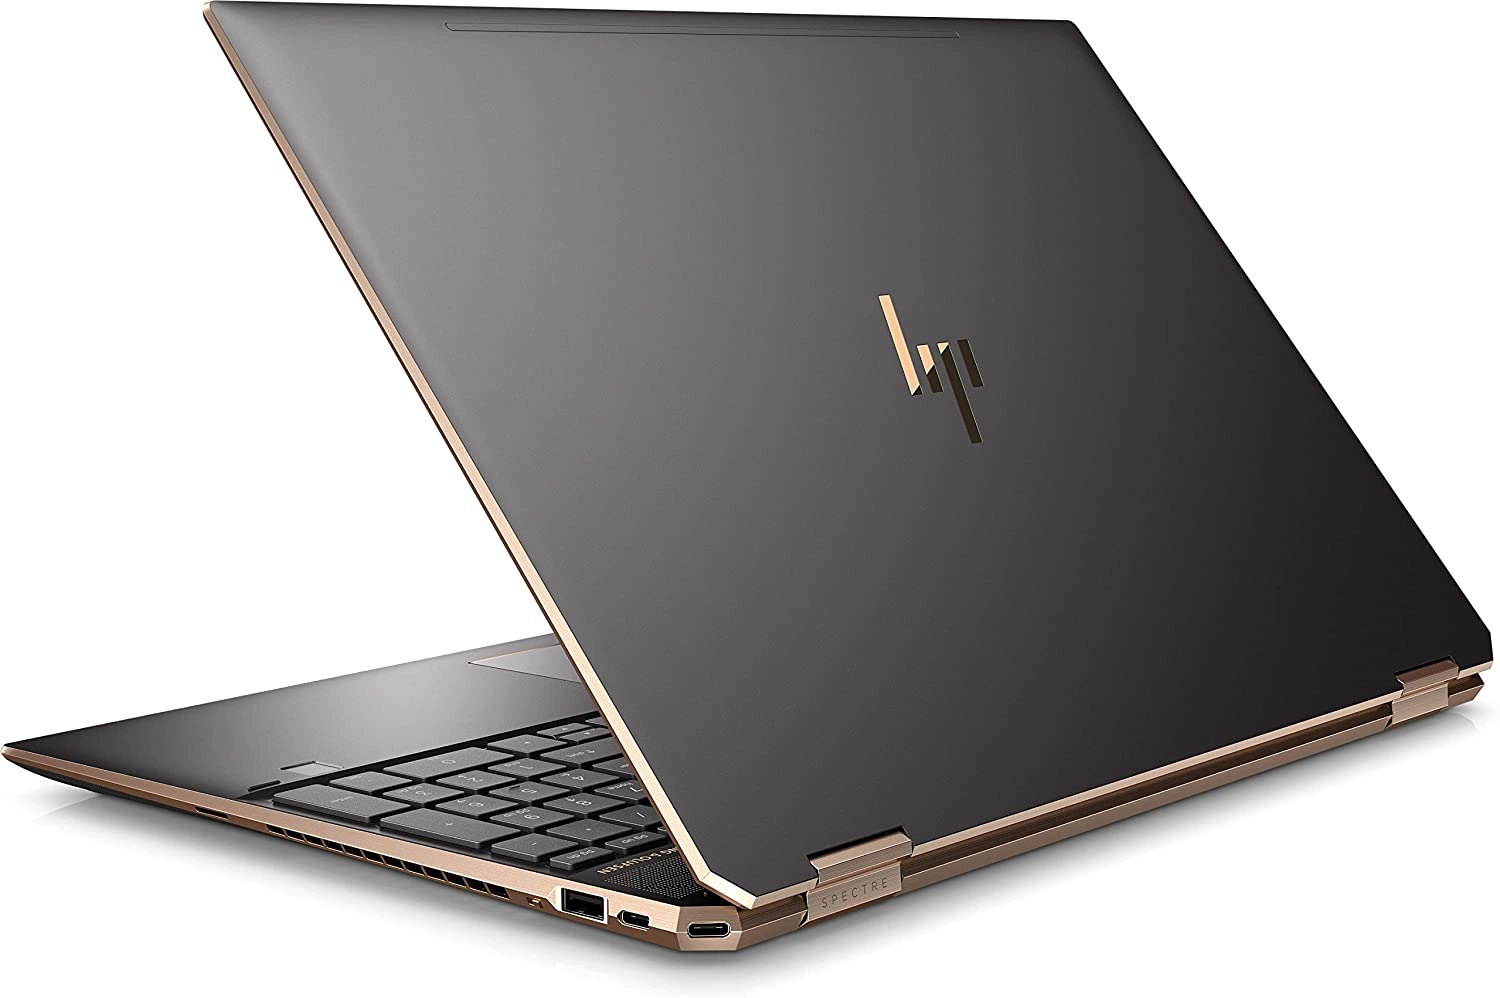 HP Spectre x360 2-in-1 laptop image